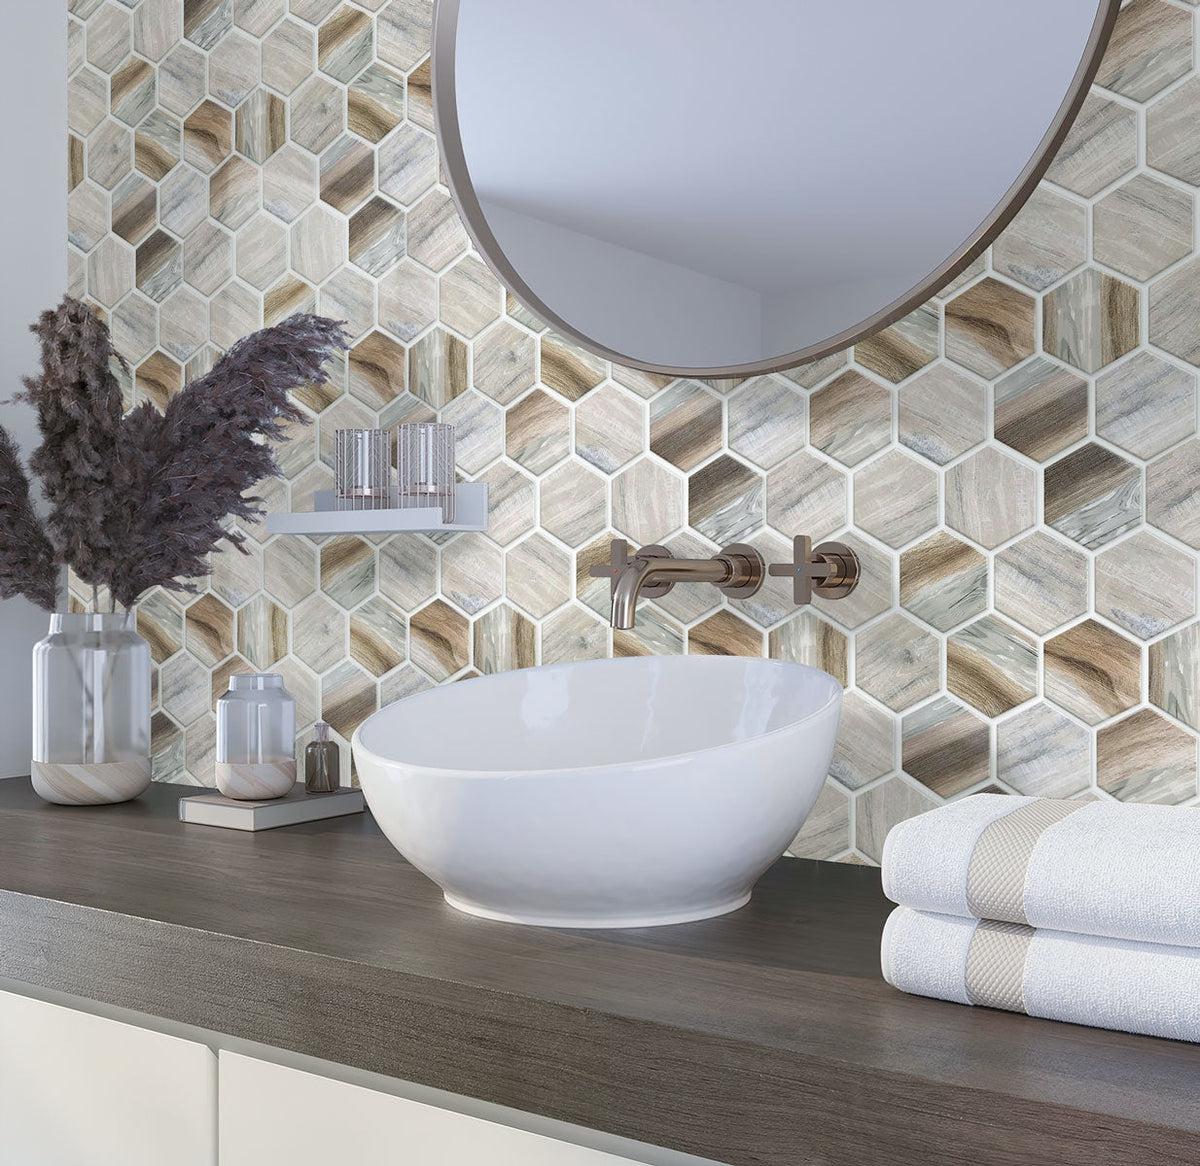 Recycled Glass Hexagon Mosaic In Wood Color bathroom backsplash